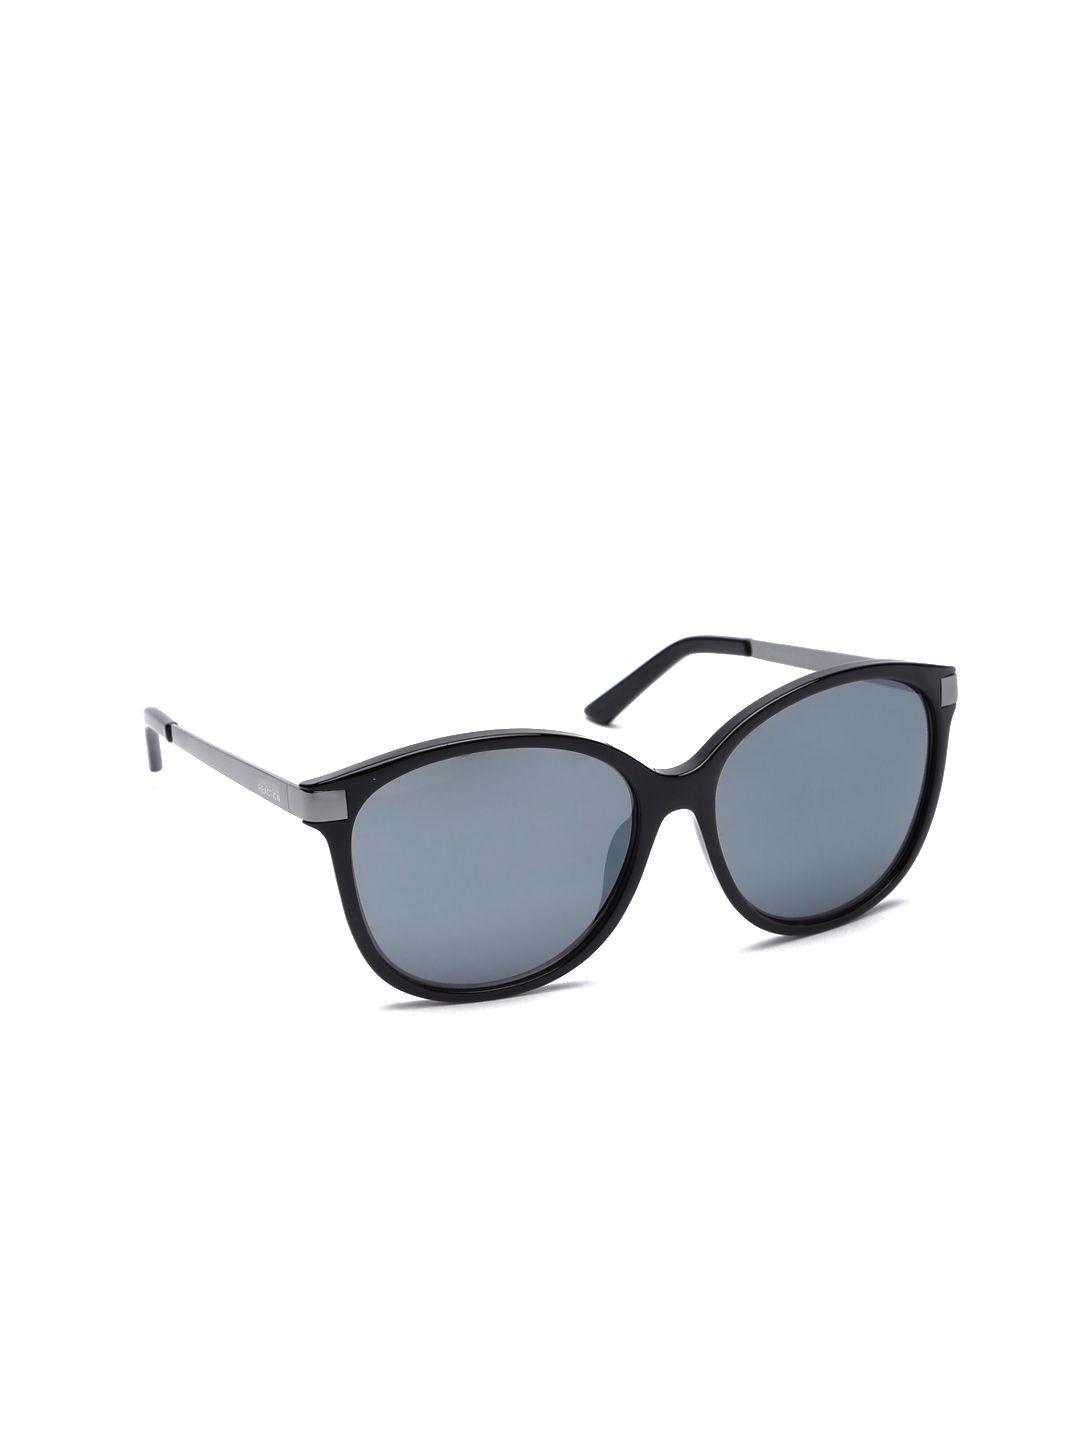 kenneth-cole-women-mirrored-sunglasses-kc2753-59-01c